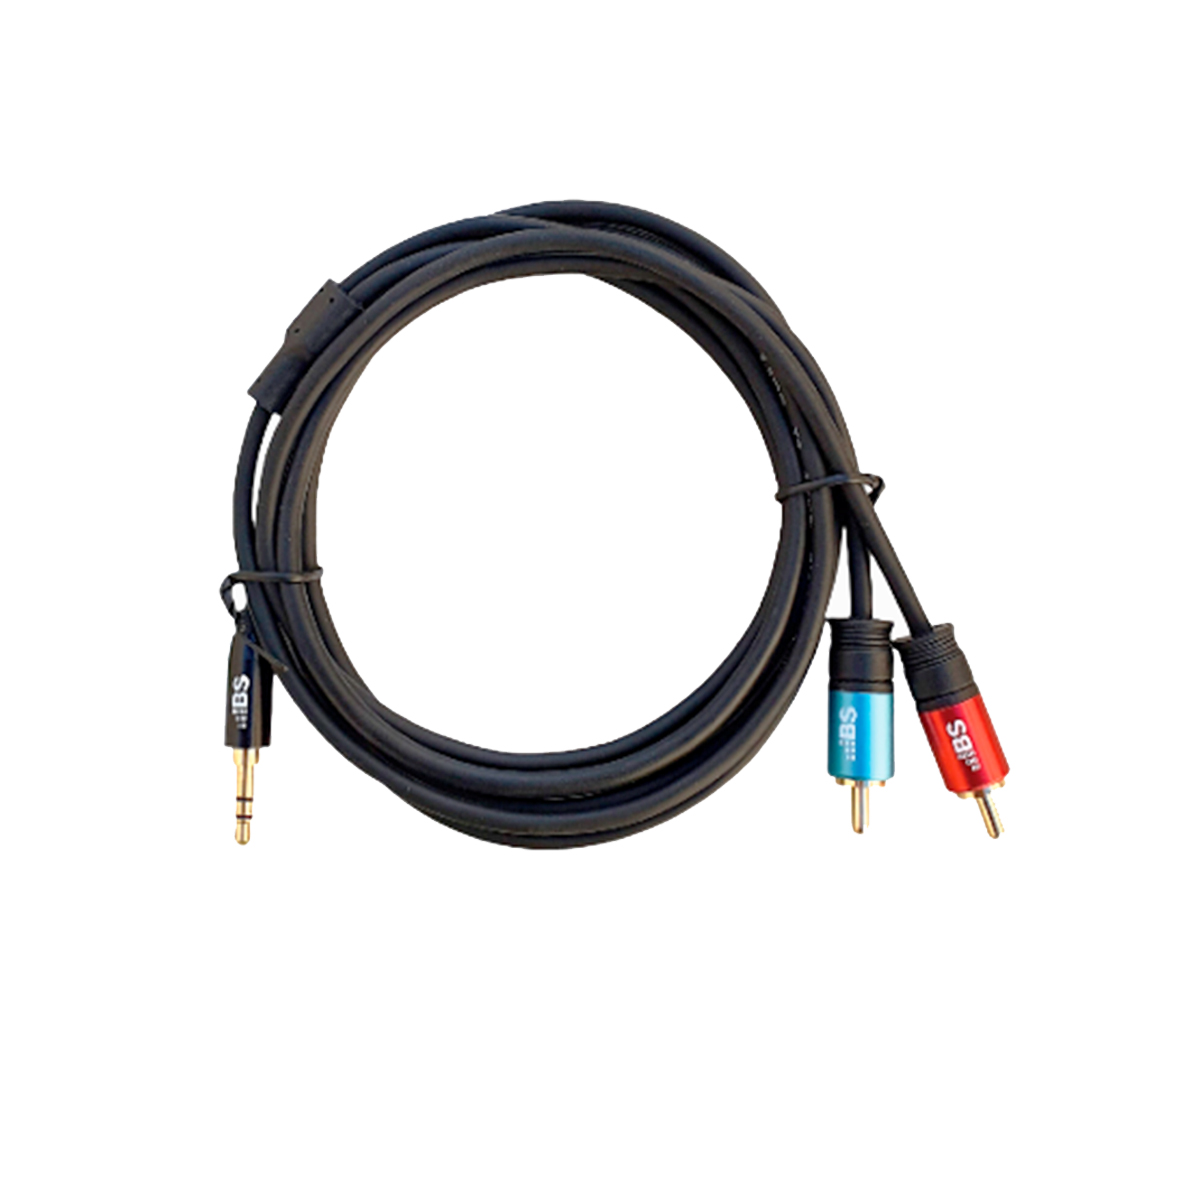 C13296 Cable RCA a Plug 3.5mm Ditronics Ecuador 1